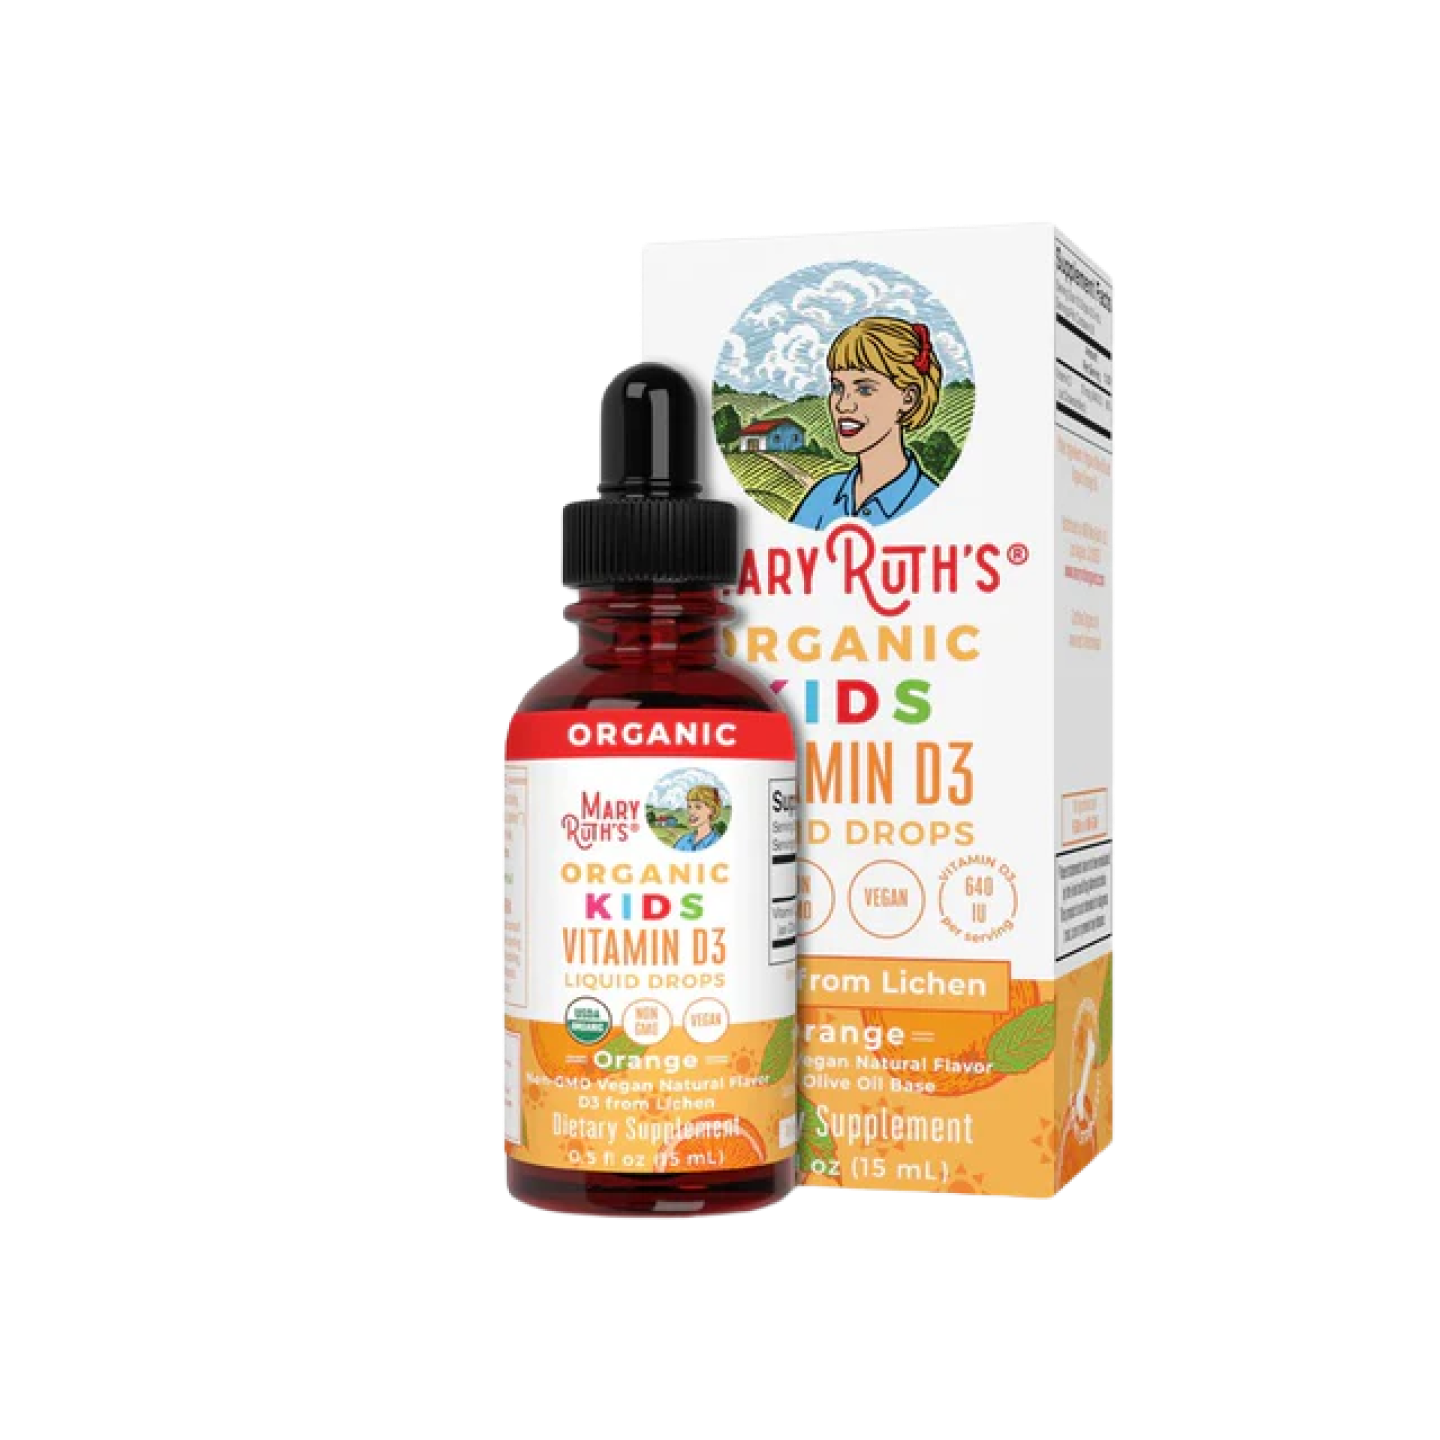 Gotas líquidas orgánicas de vitamina D3 para niños / Kids Vitamin d3 Drops, Orang, org, 0.5 ozMARY RUTH'S